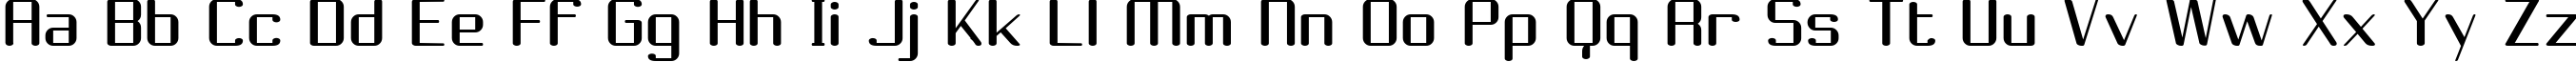 Пример написания английского алфавита шрифтом Choktoff